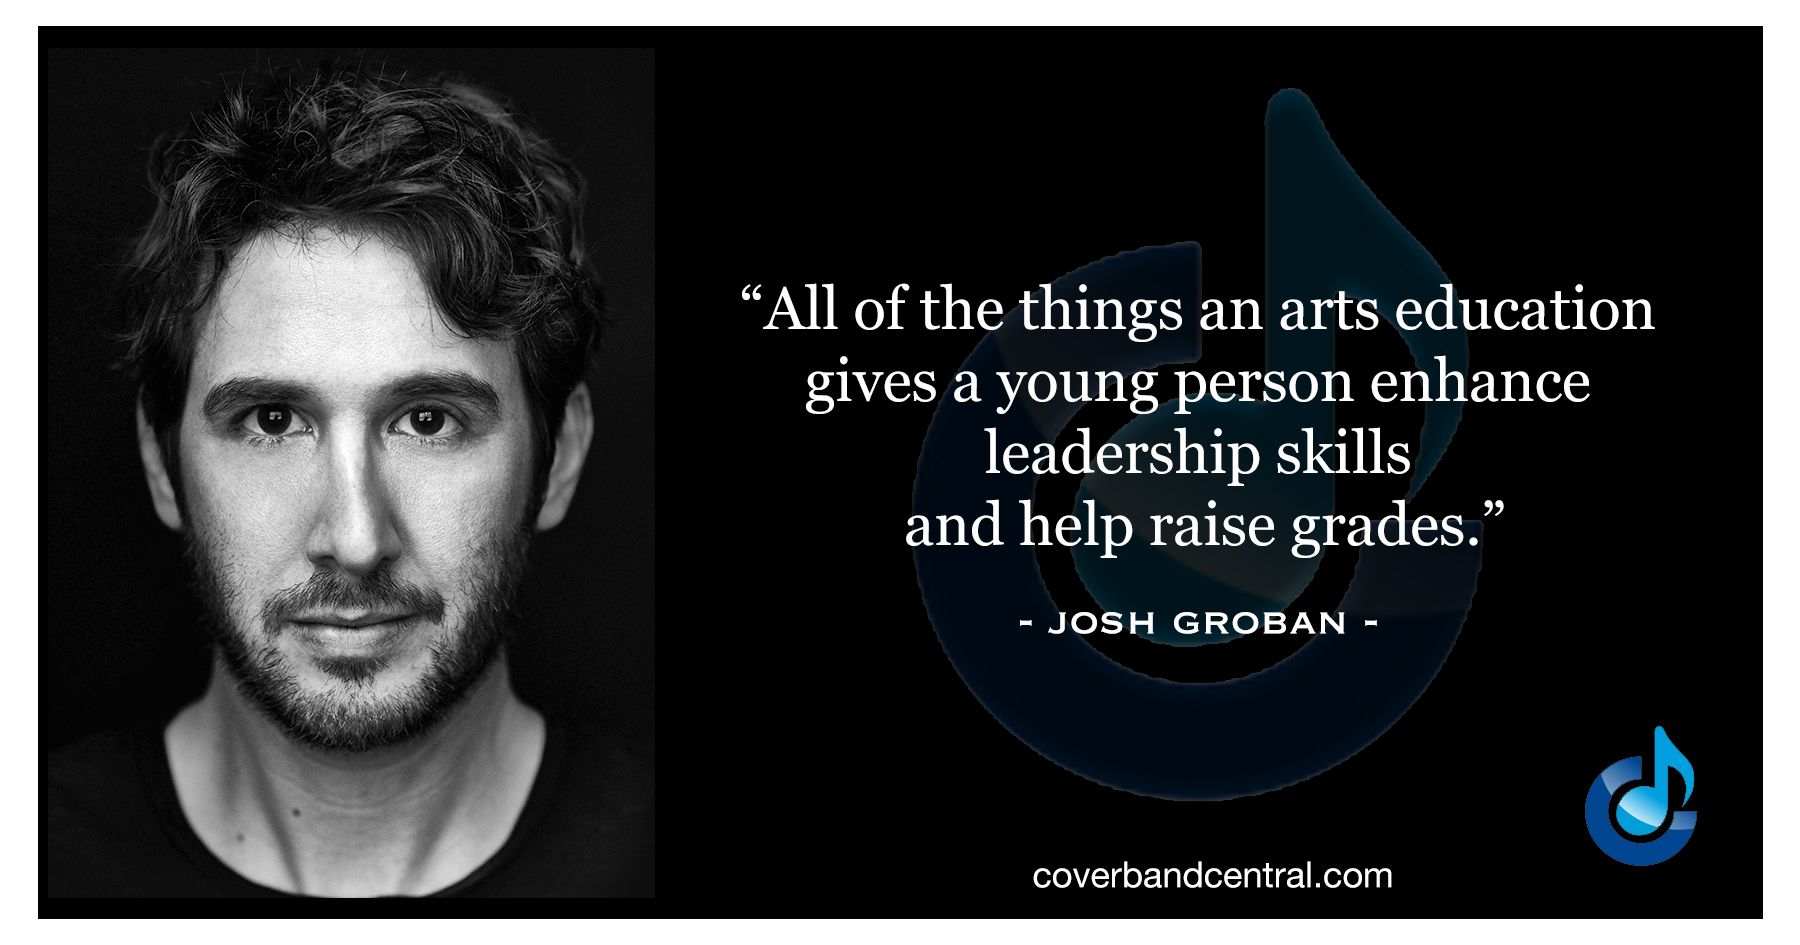 Josh Groban quote